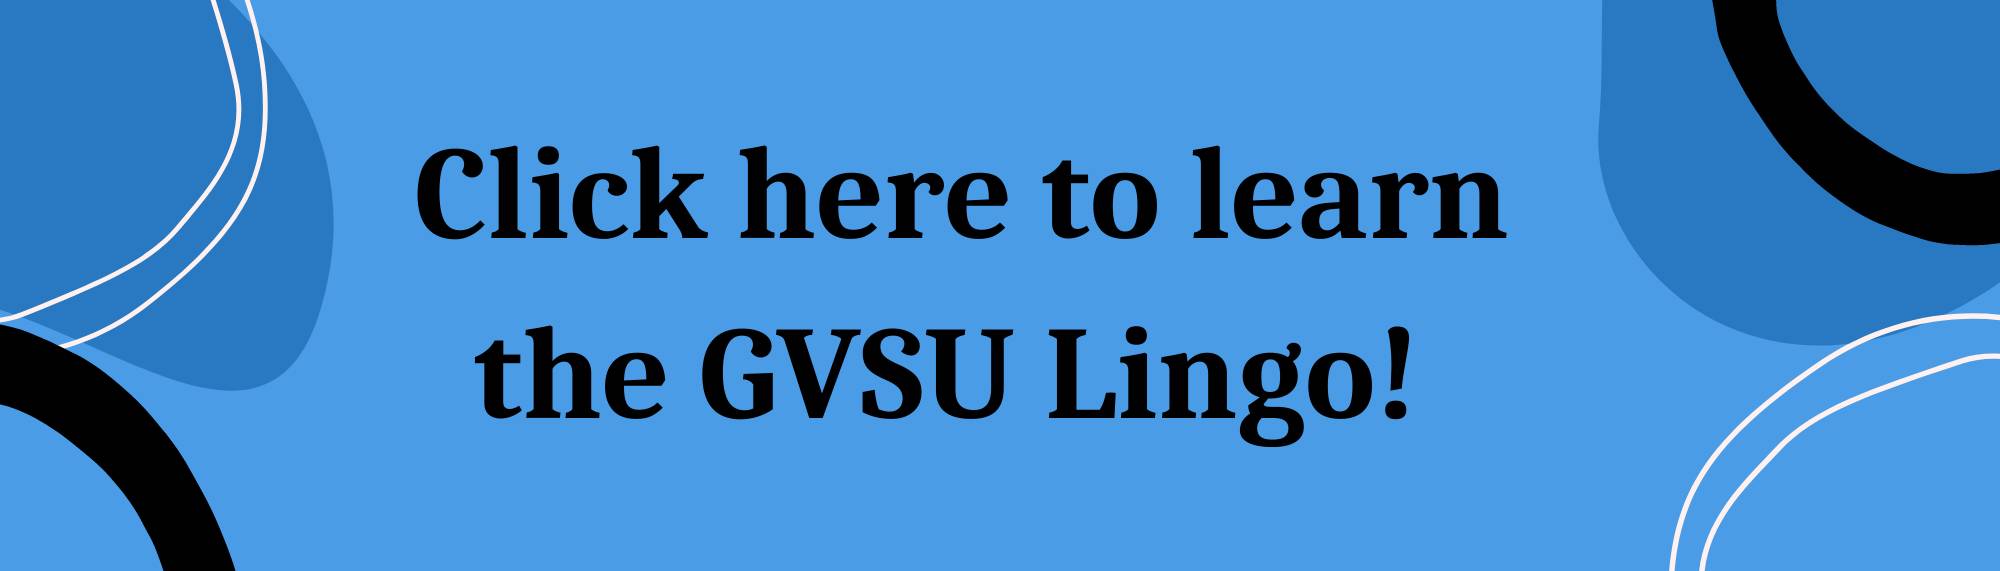 link to learn the gvsu lingo